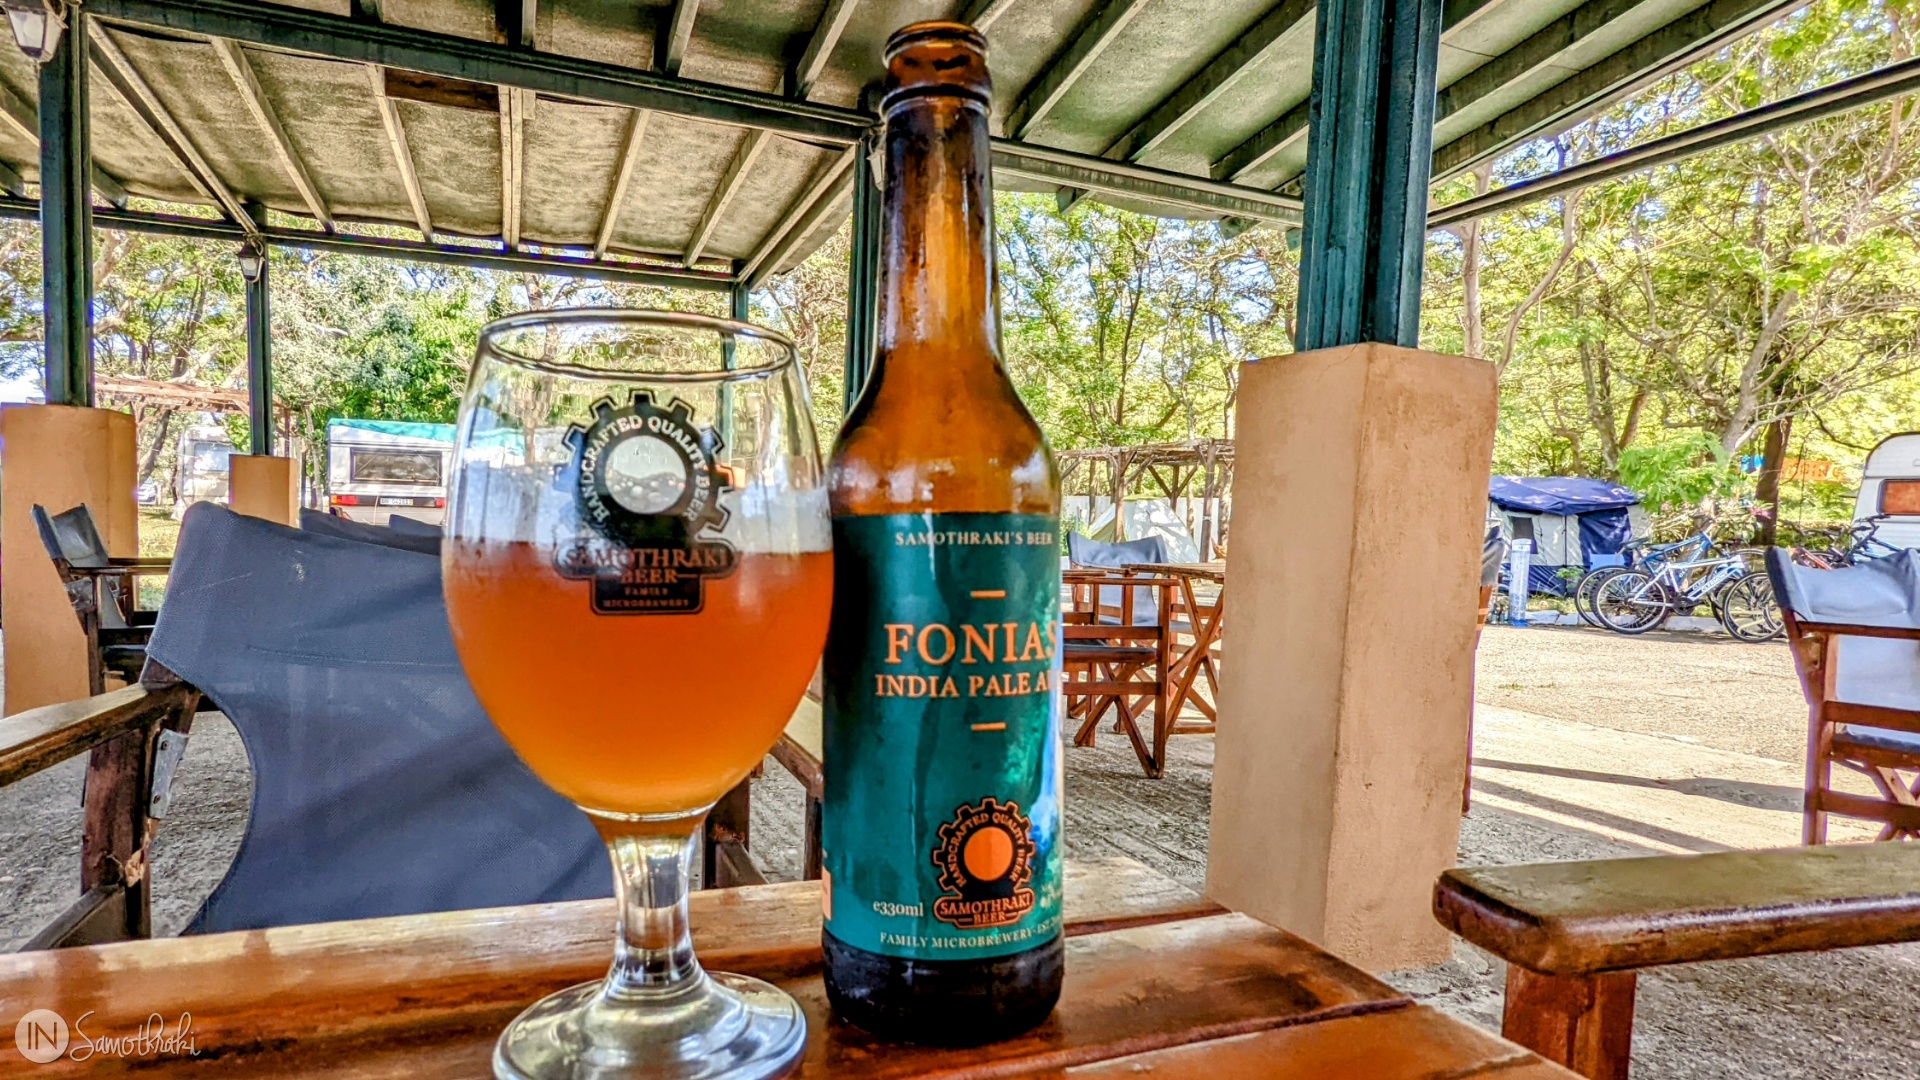 Fonias Pale Ale, the beer of Samothraki